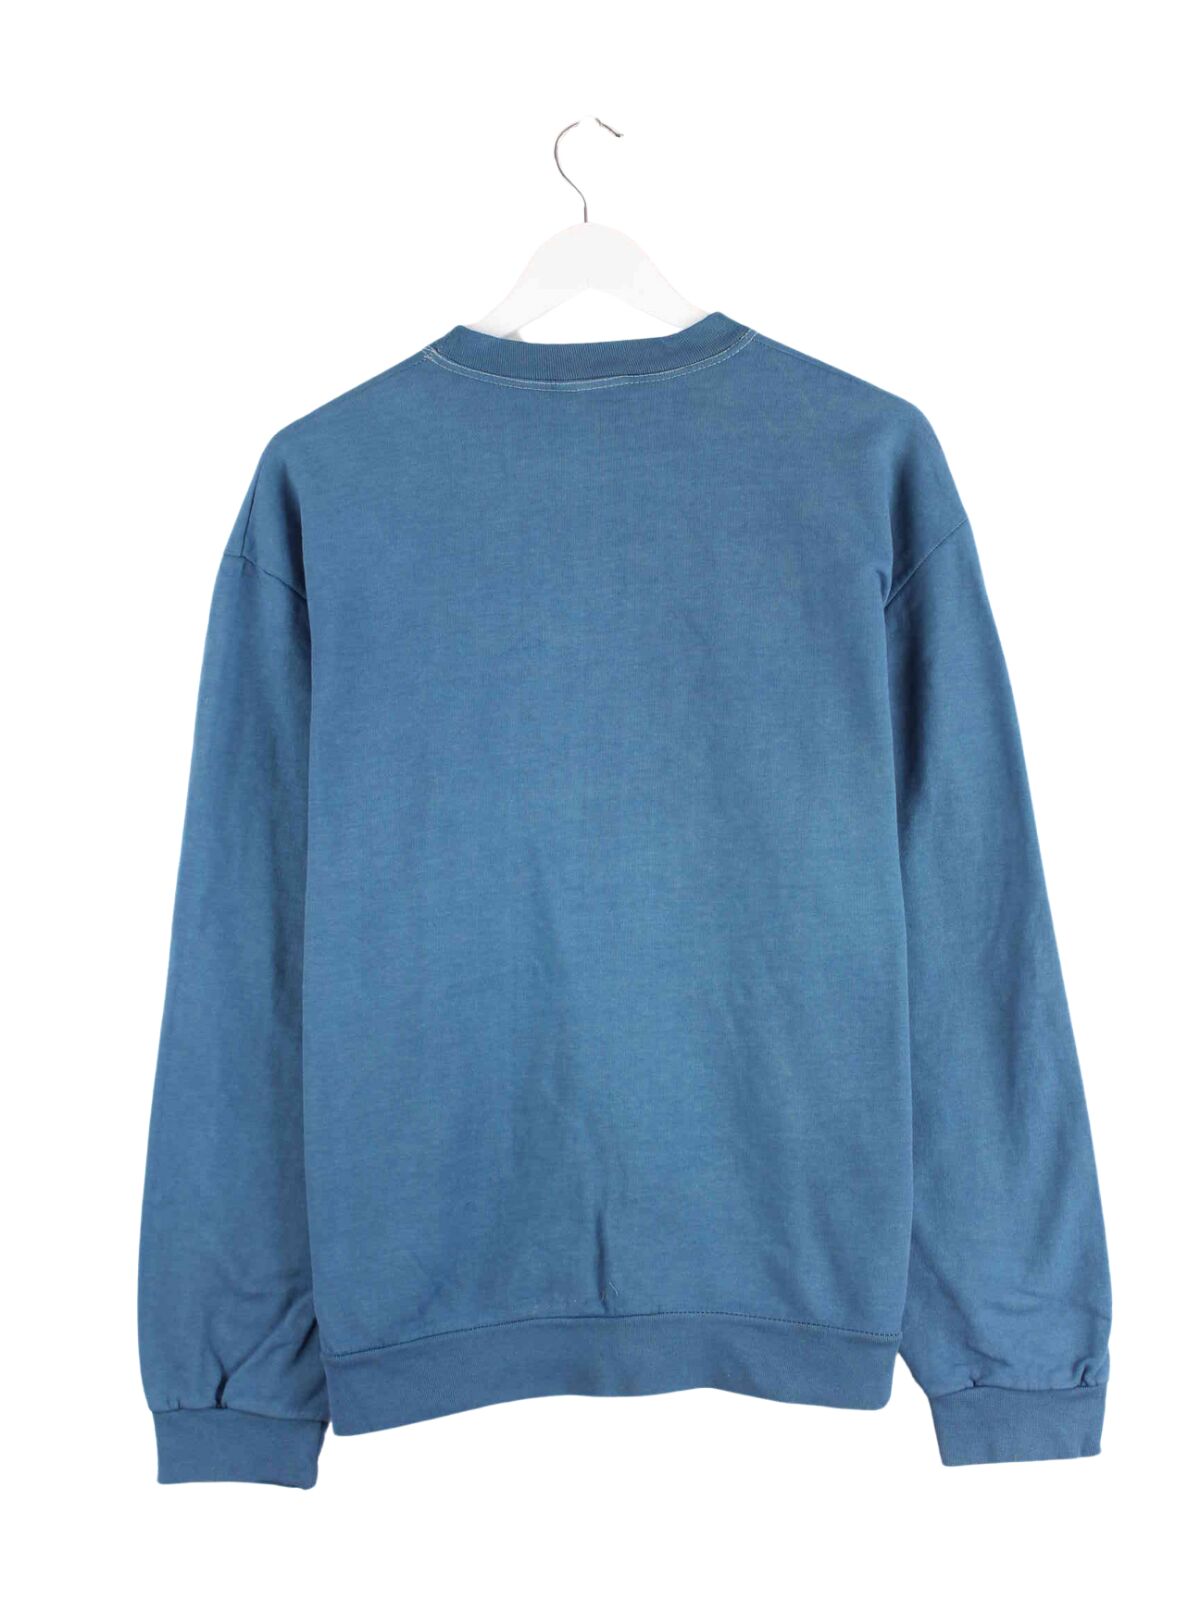 Reebok 00s Basic Sweater Blau L (back image)